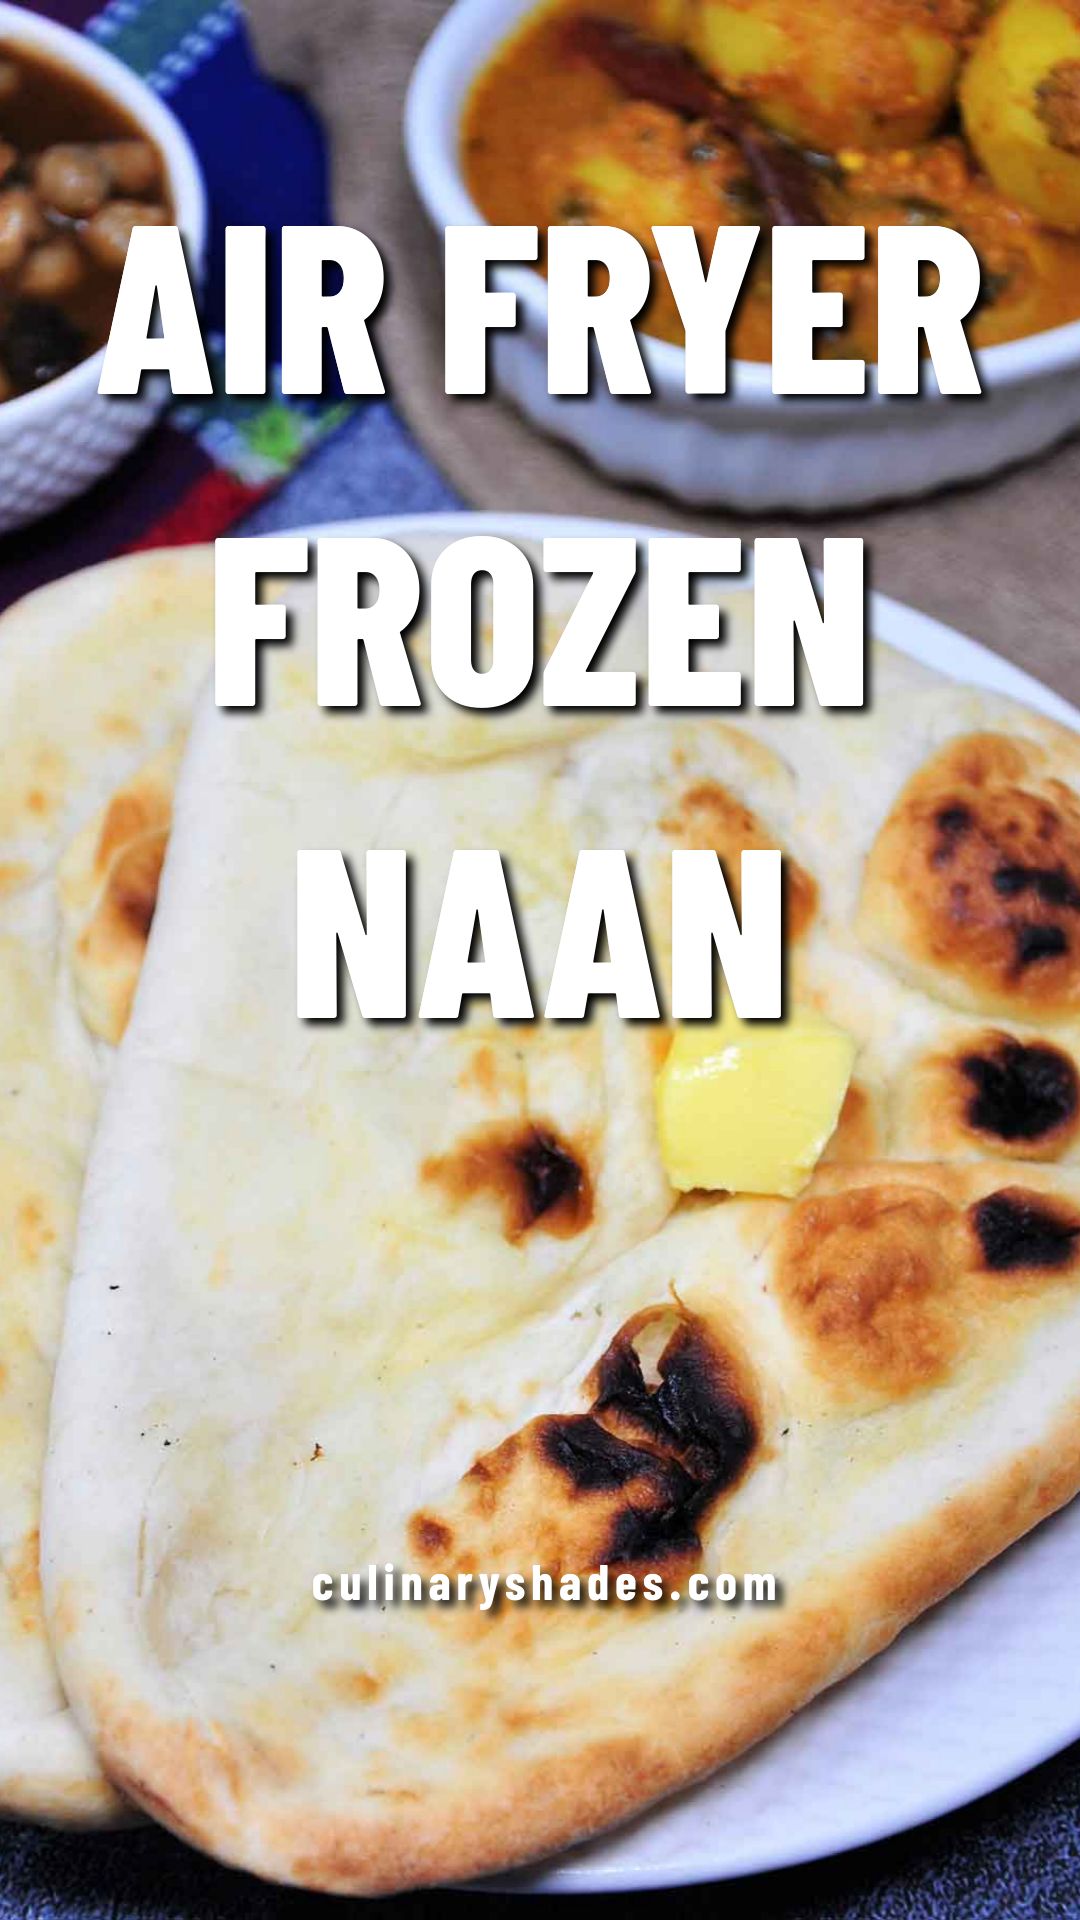 Air fryer frozen naan served in a plate.